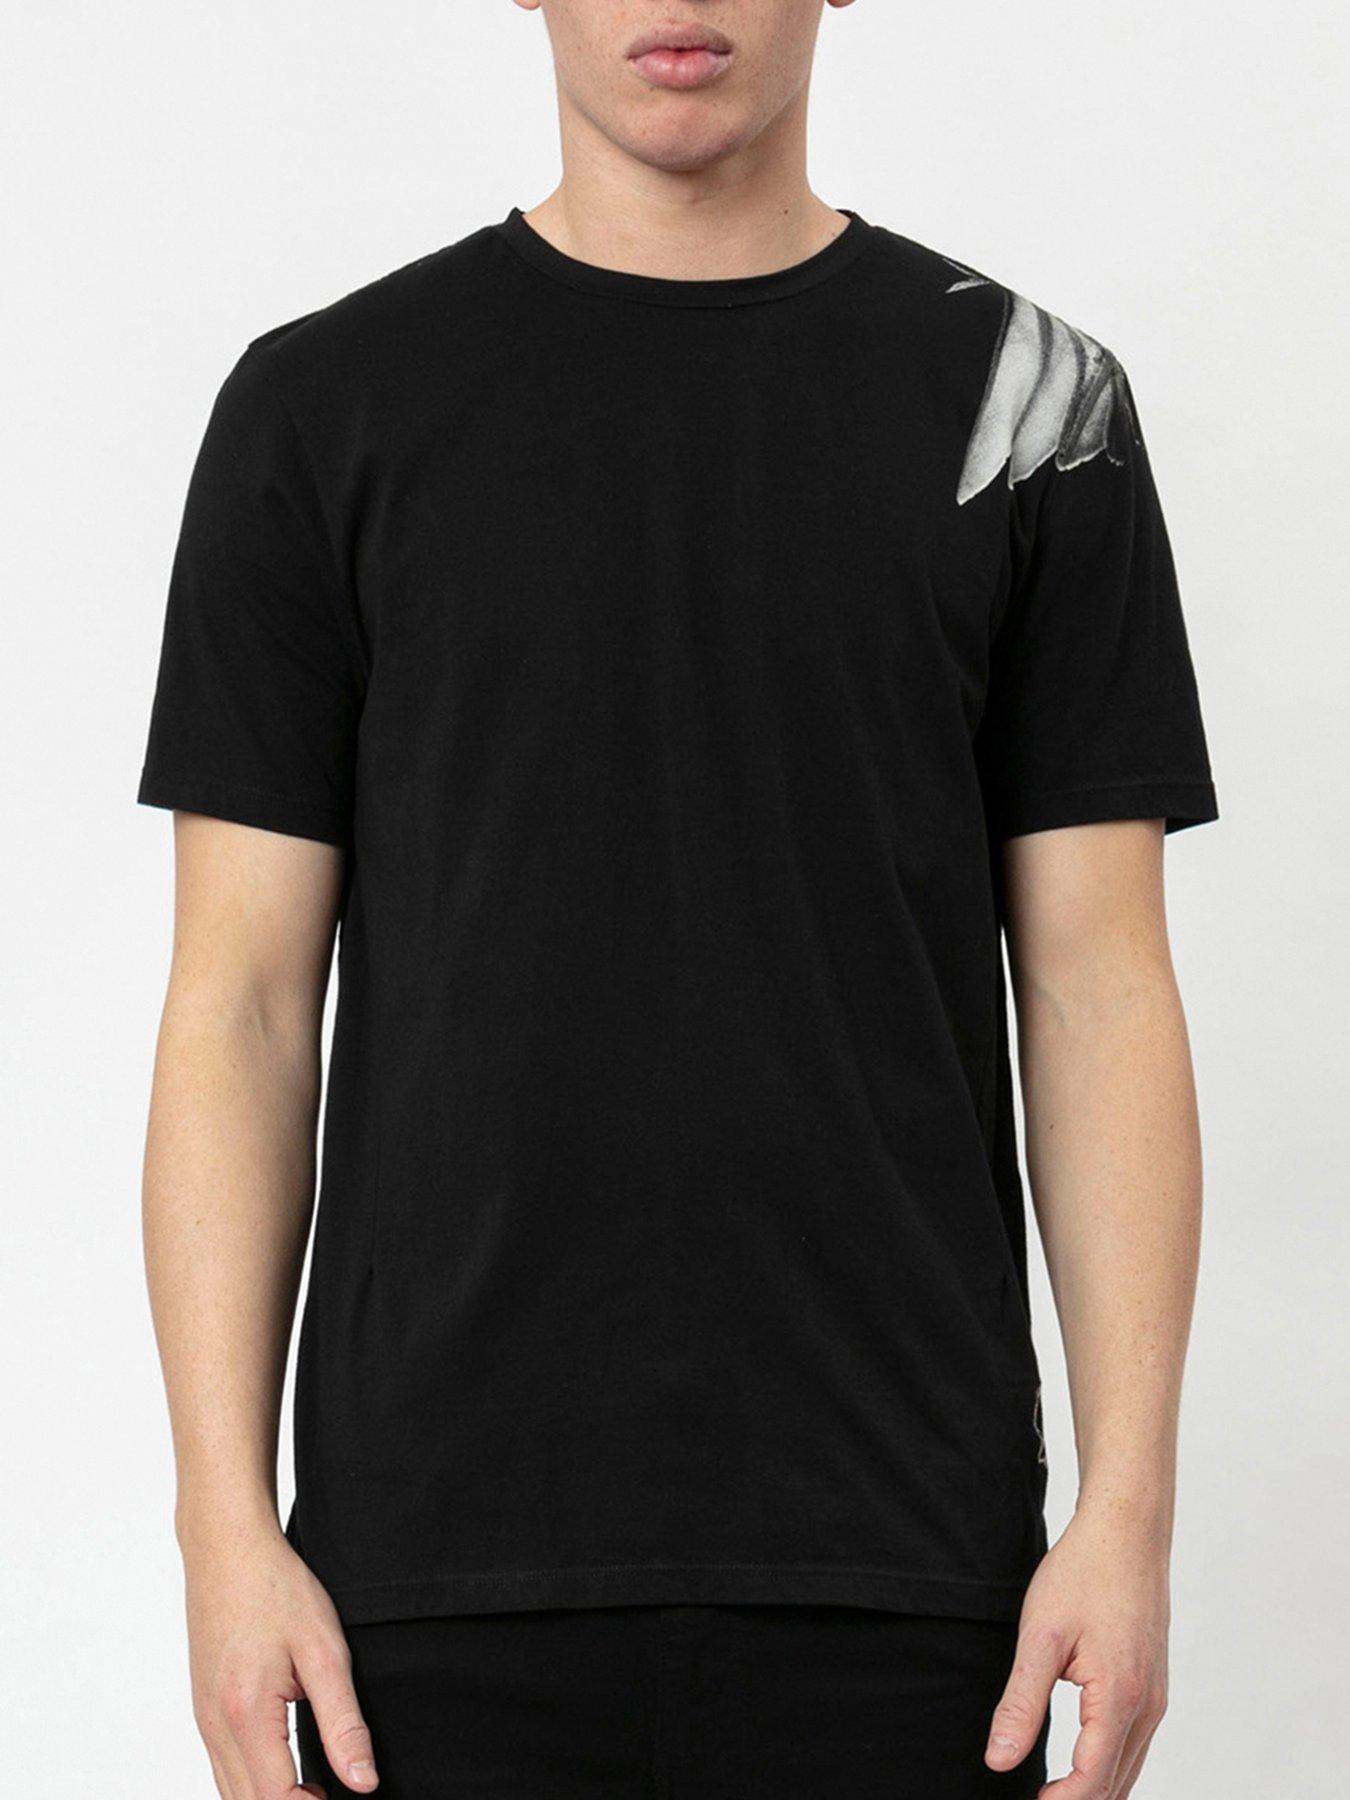  Wings Back Print T-Shirt - Black